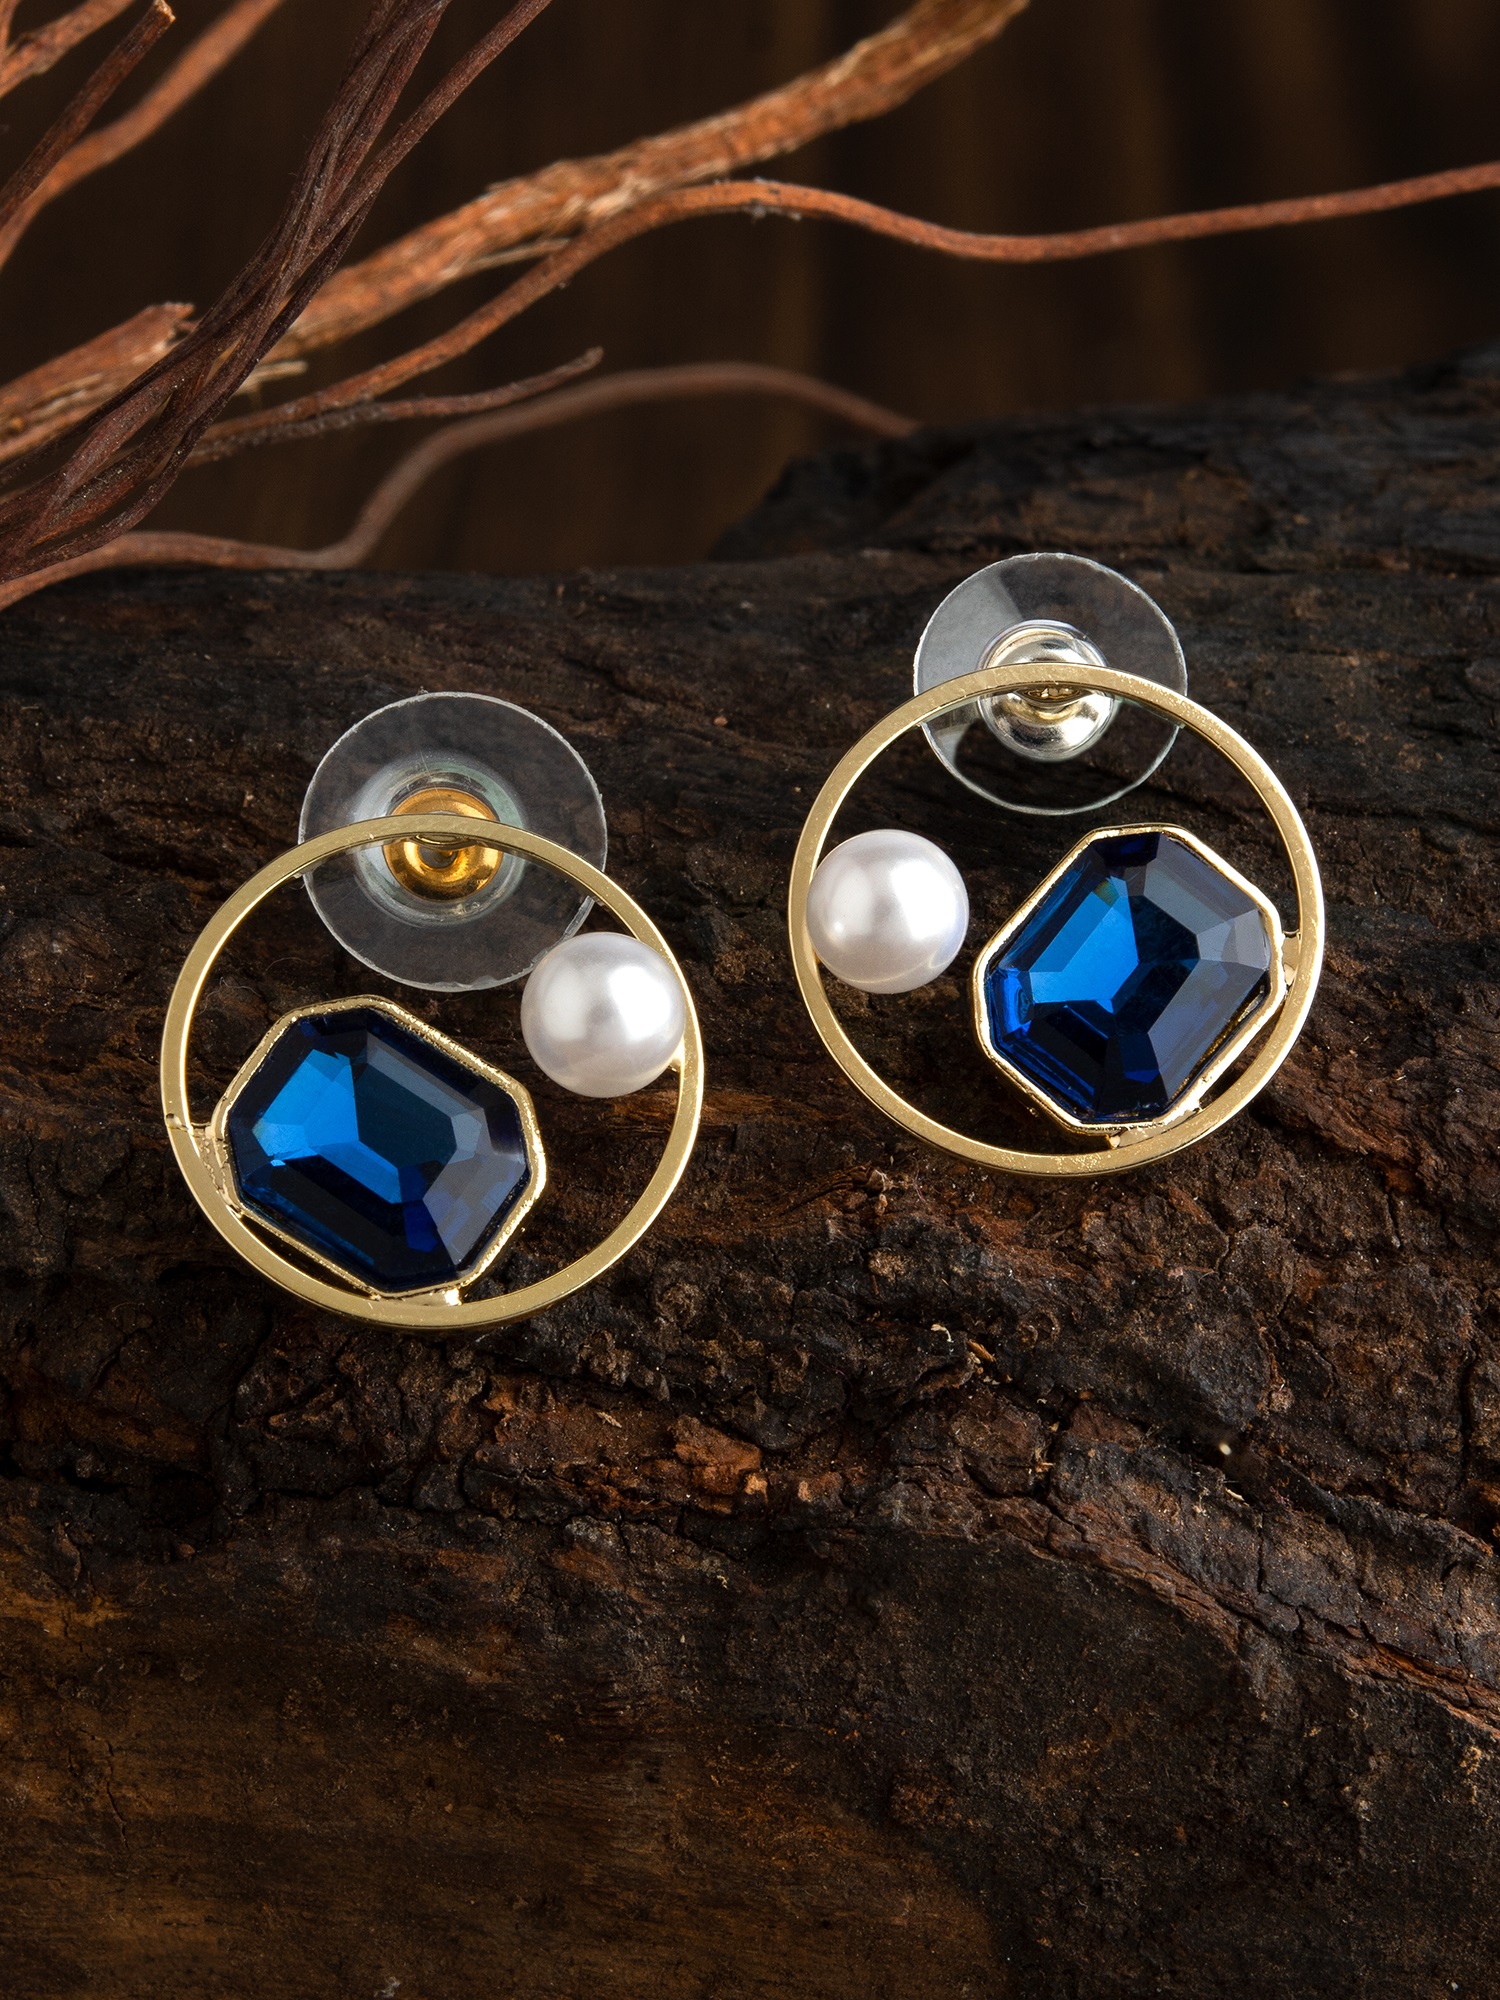 Imitation Stud Earrings, Imitation earring - South India Jewels.